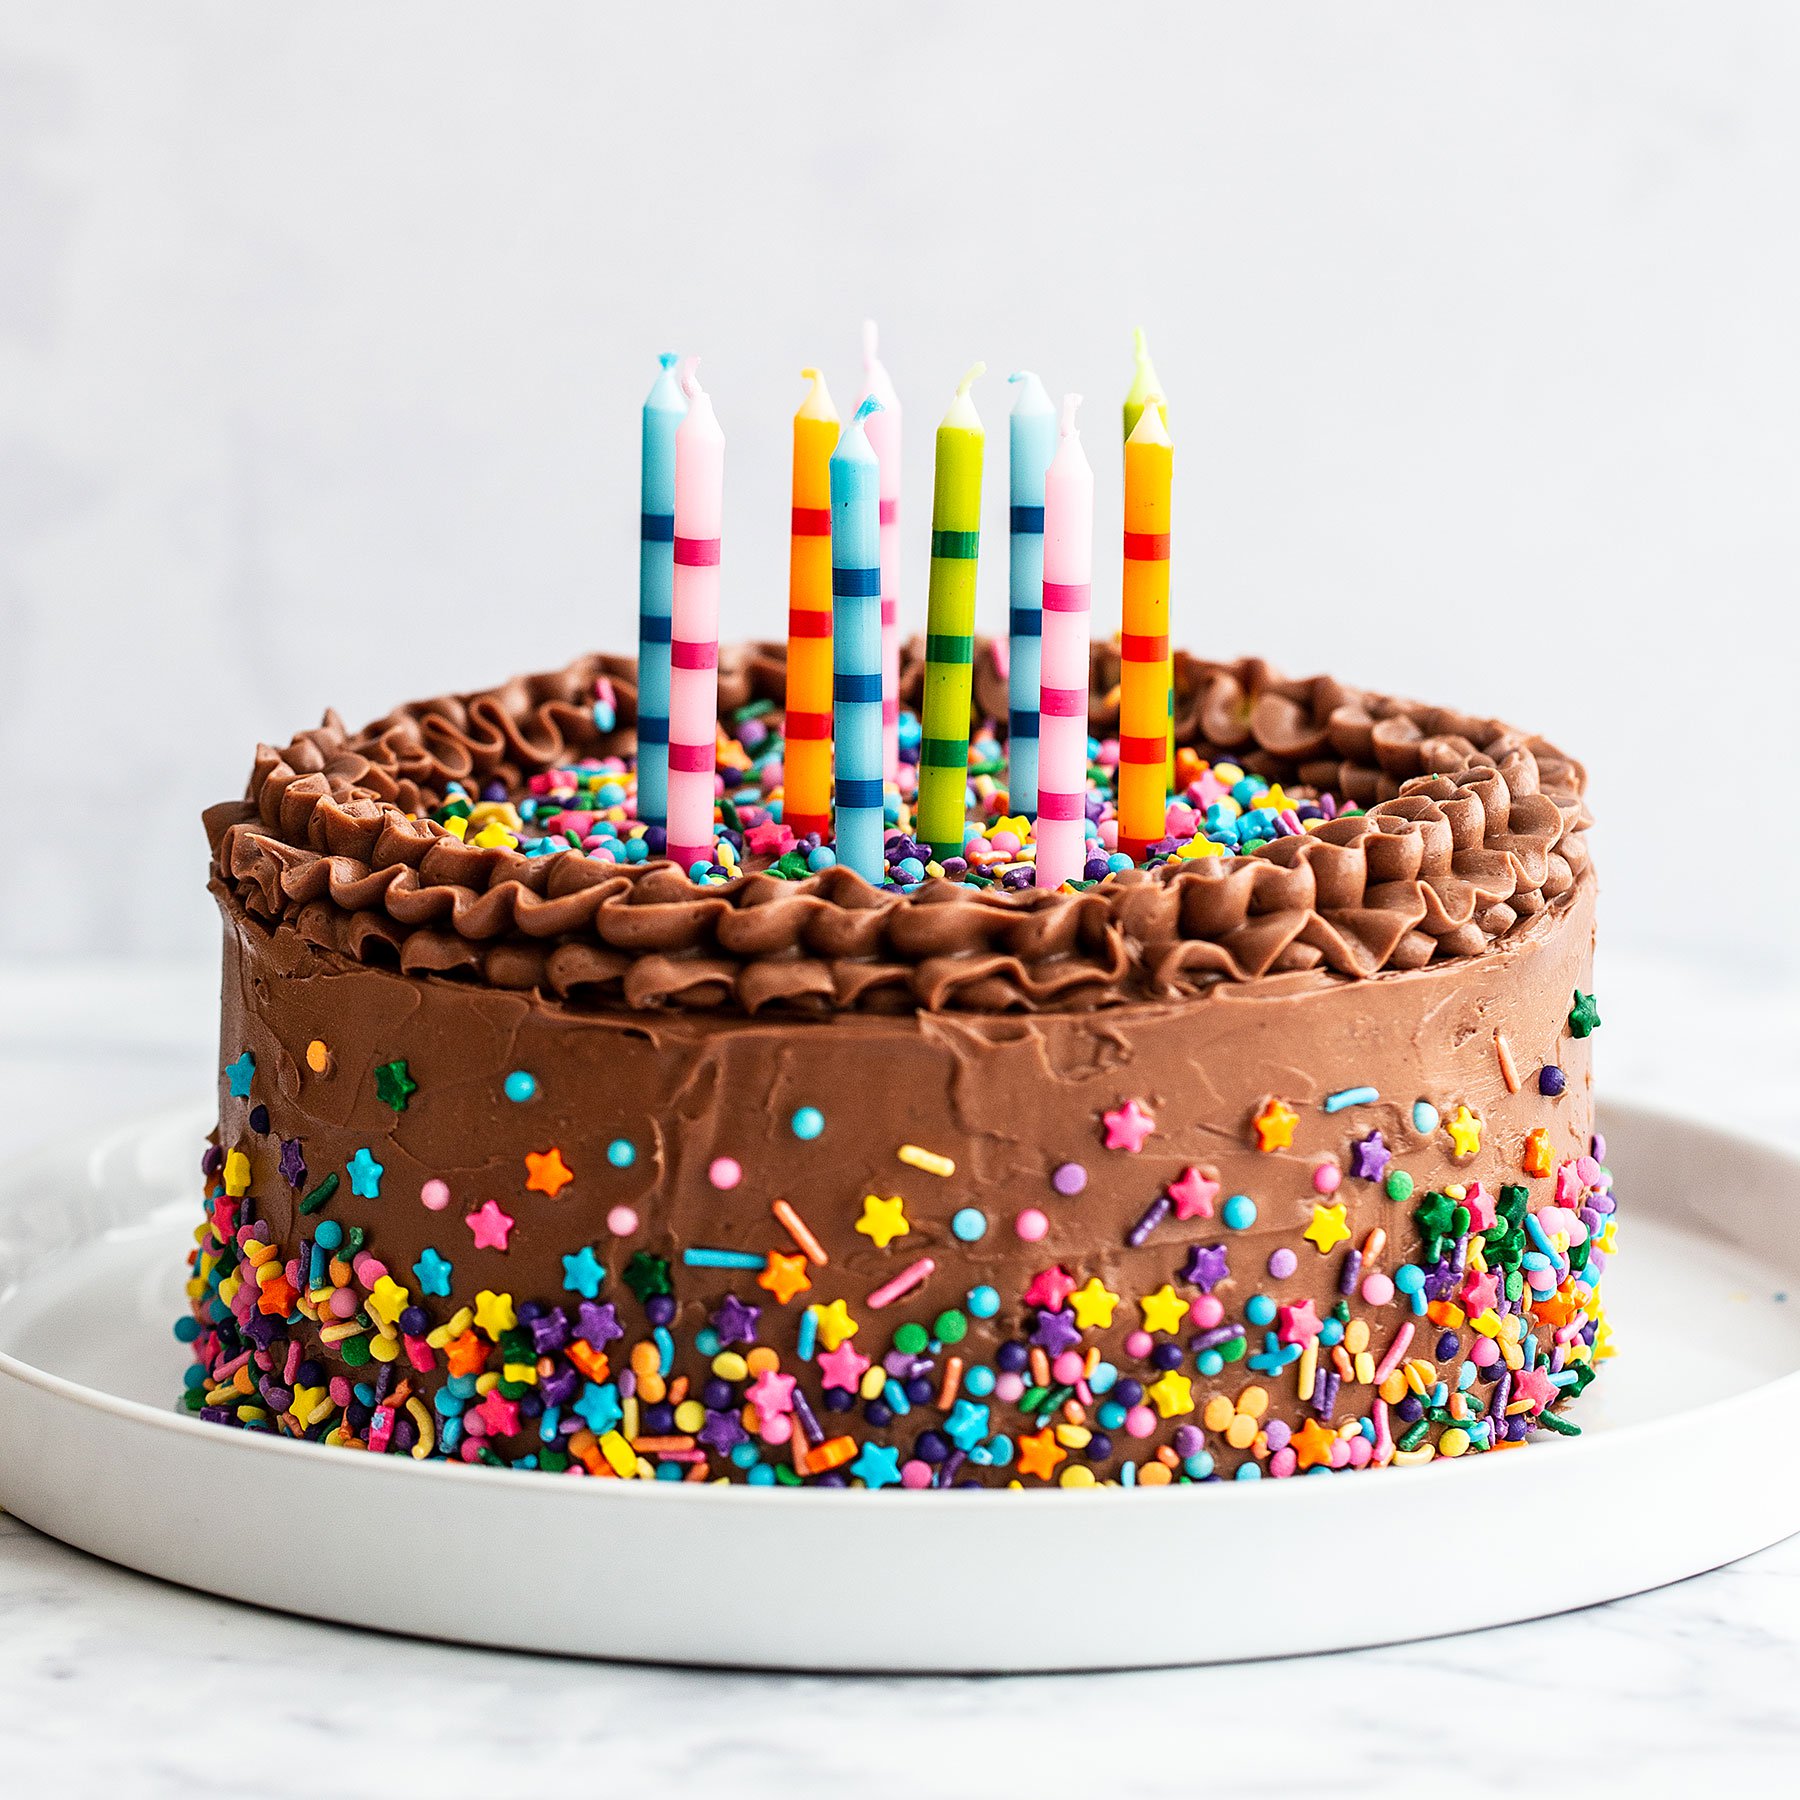 Cake Happy Birthday Day Wishes images  Mirchistatus